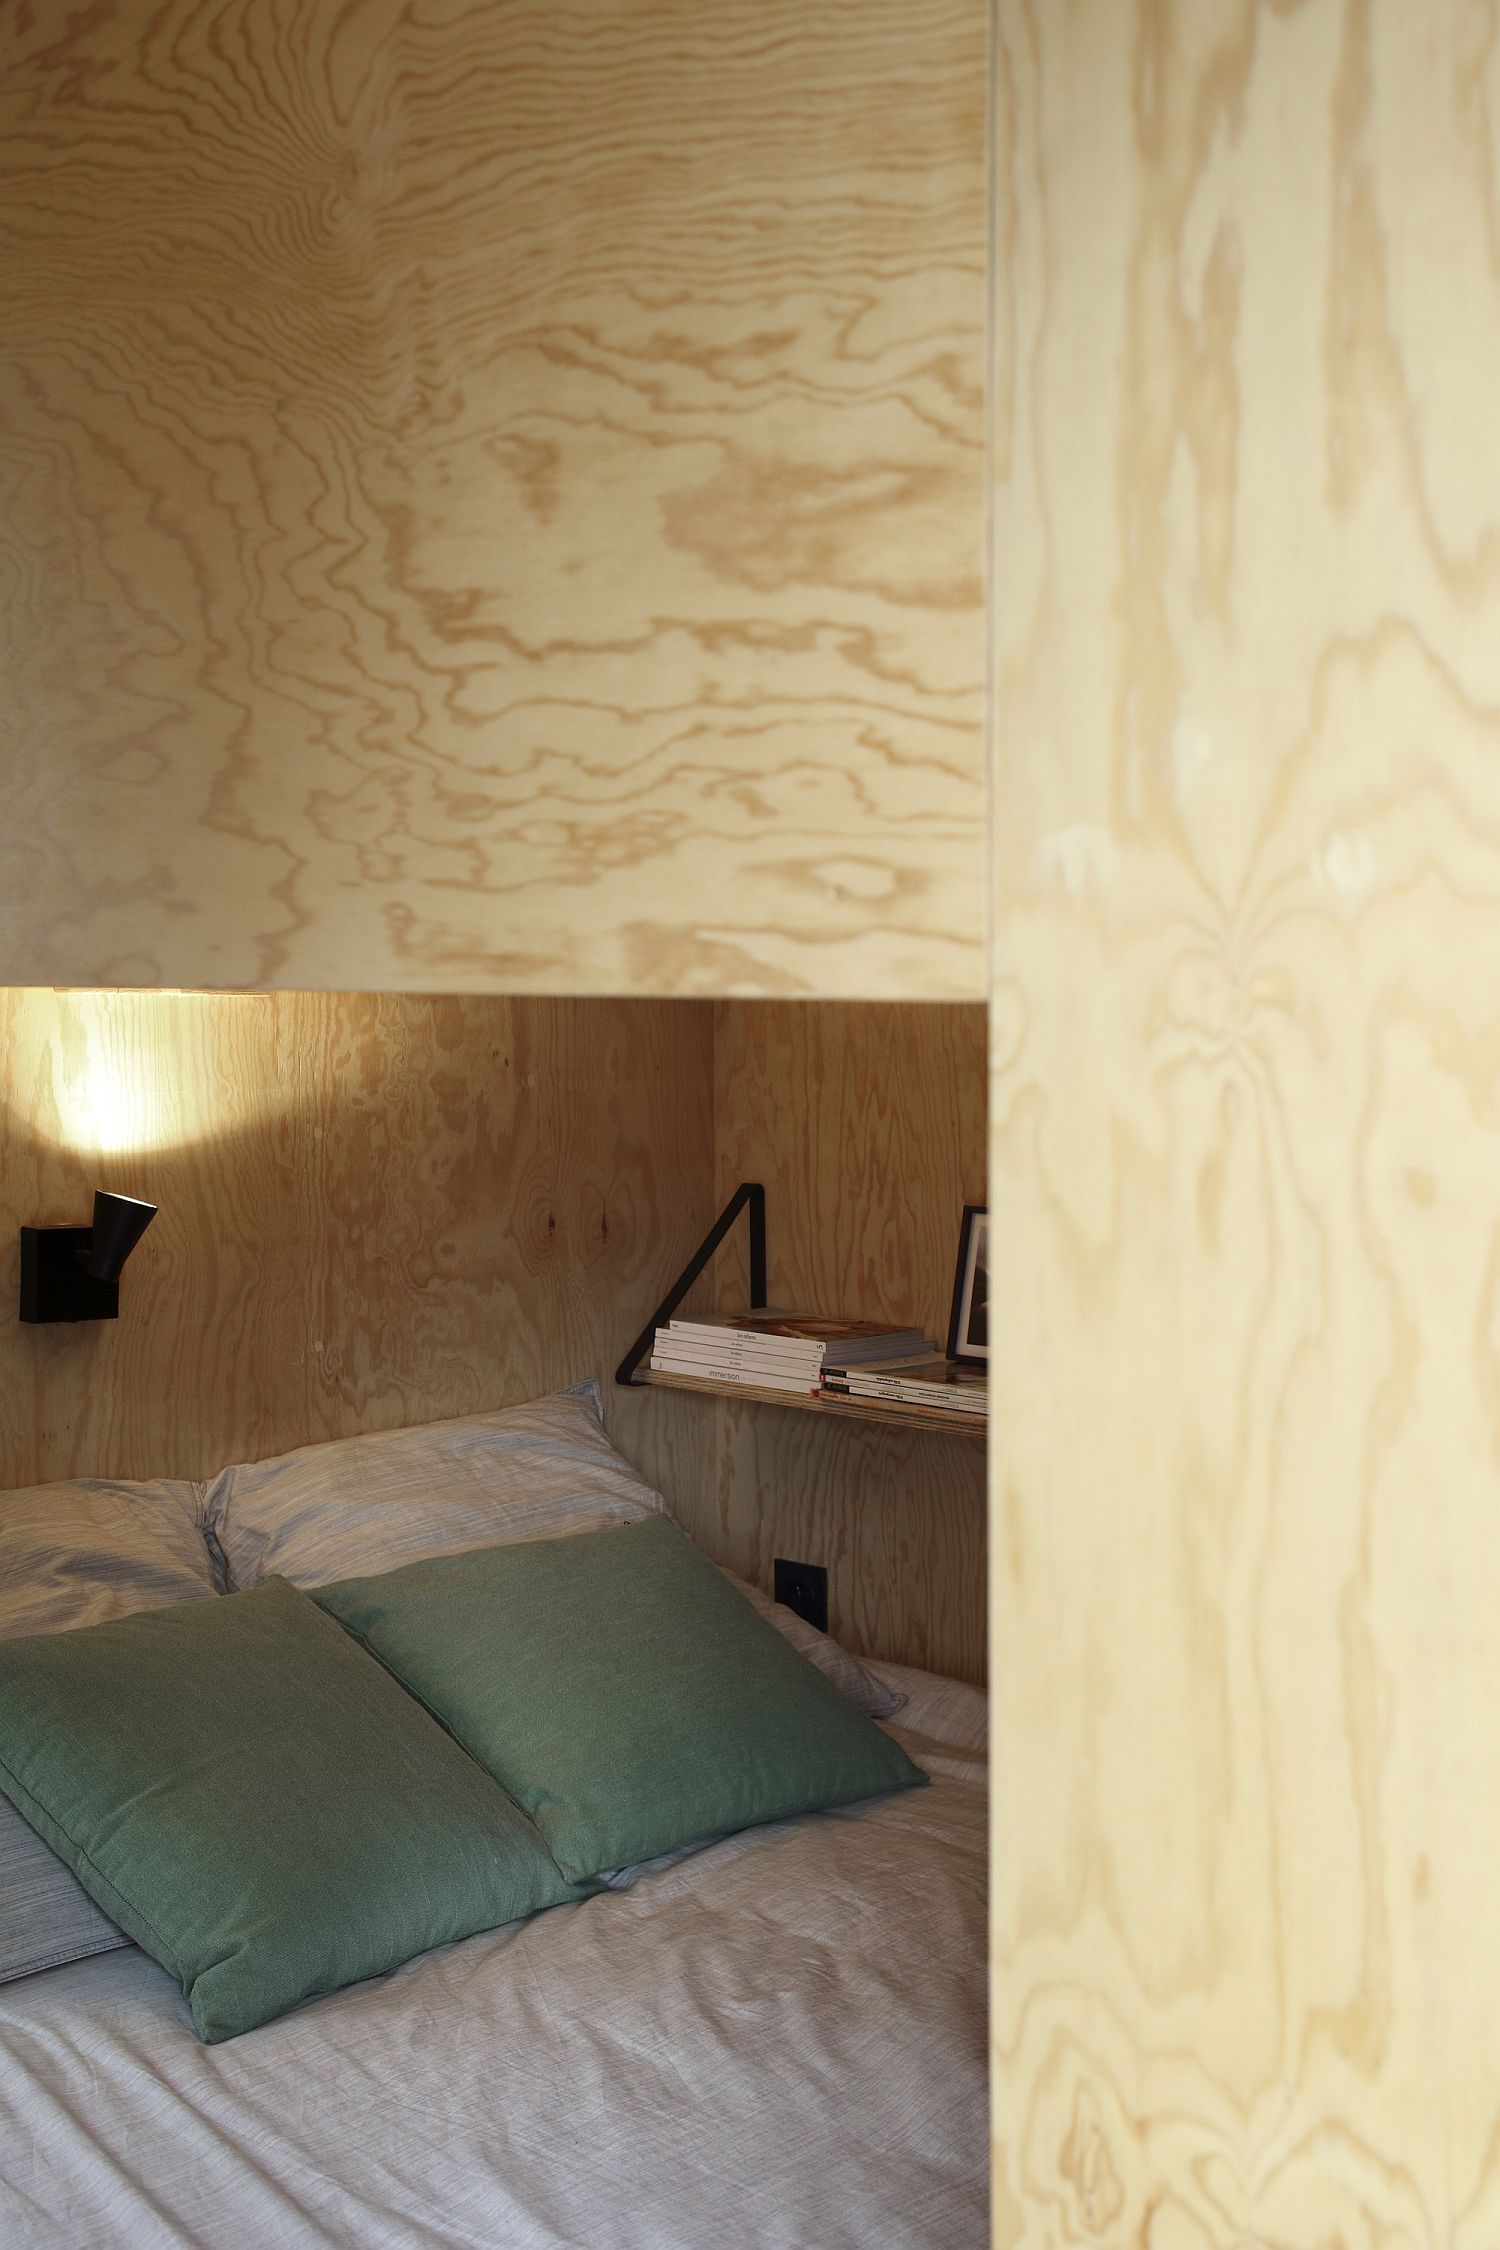 Smart bunk bed design inside the prefab cabin